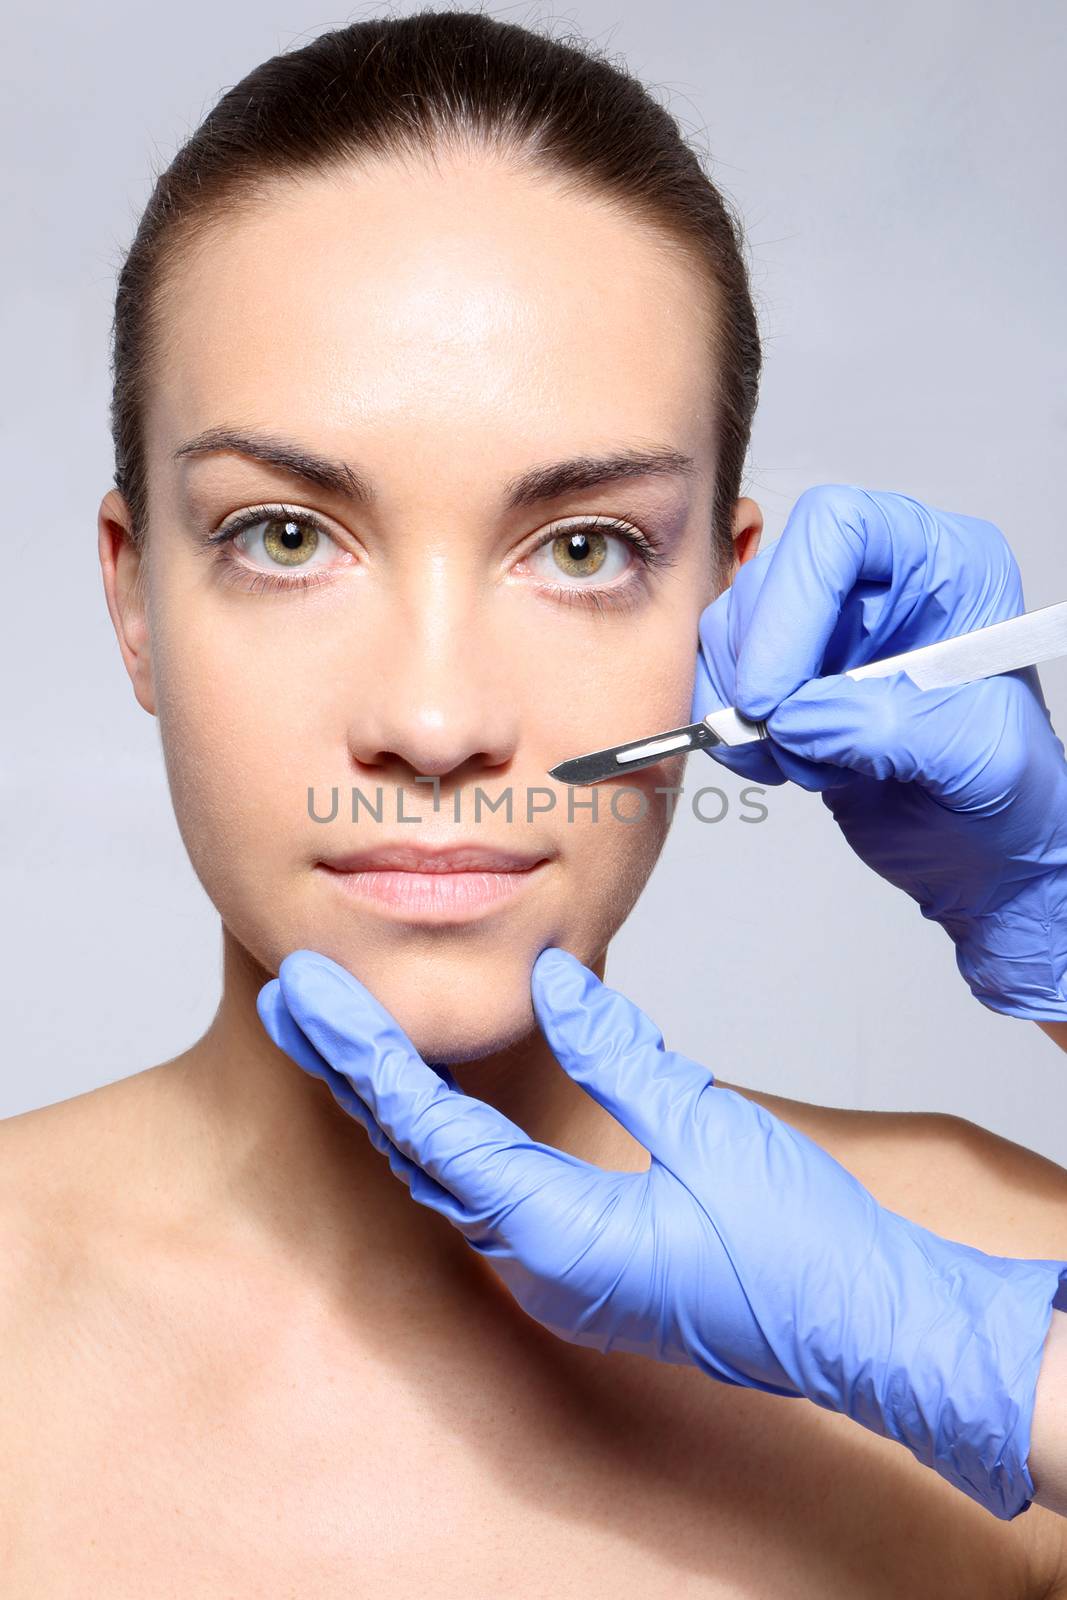 Caucasian woman during surgery using a scalpel